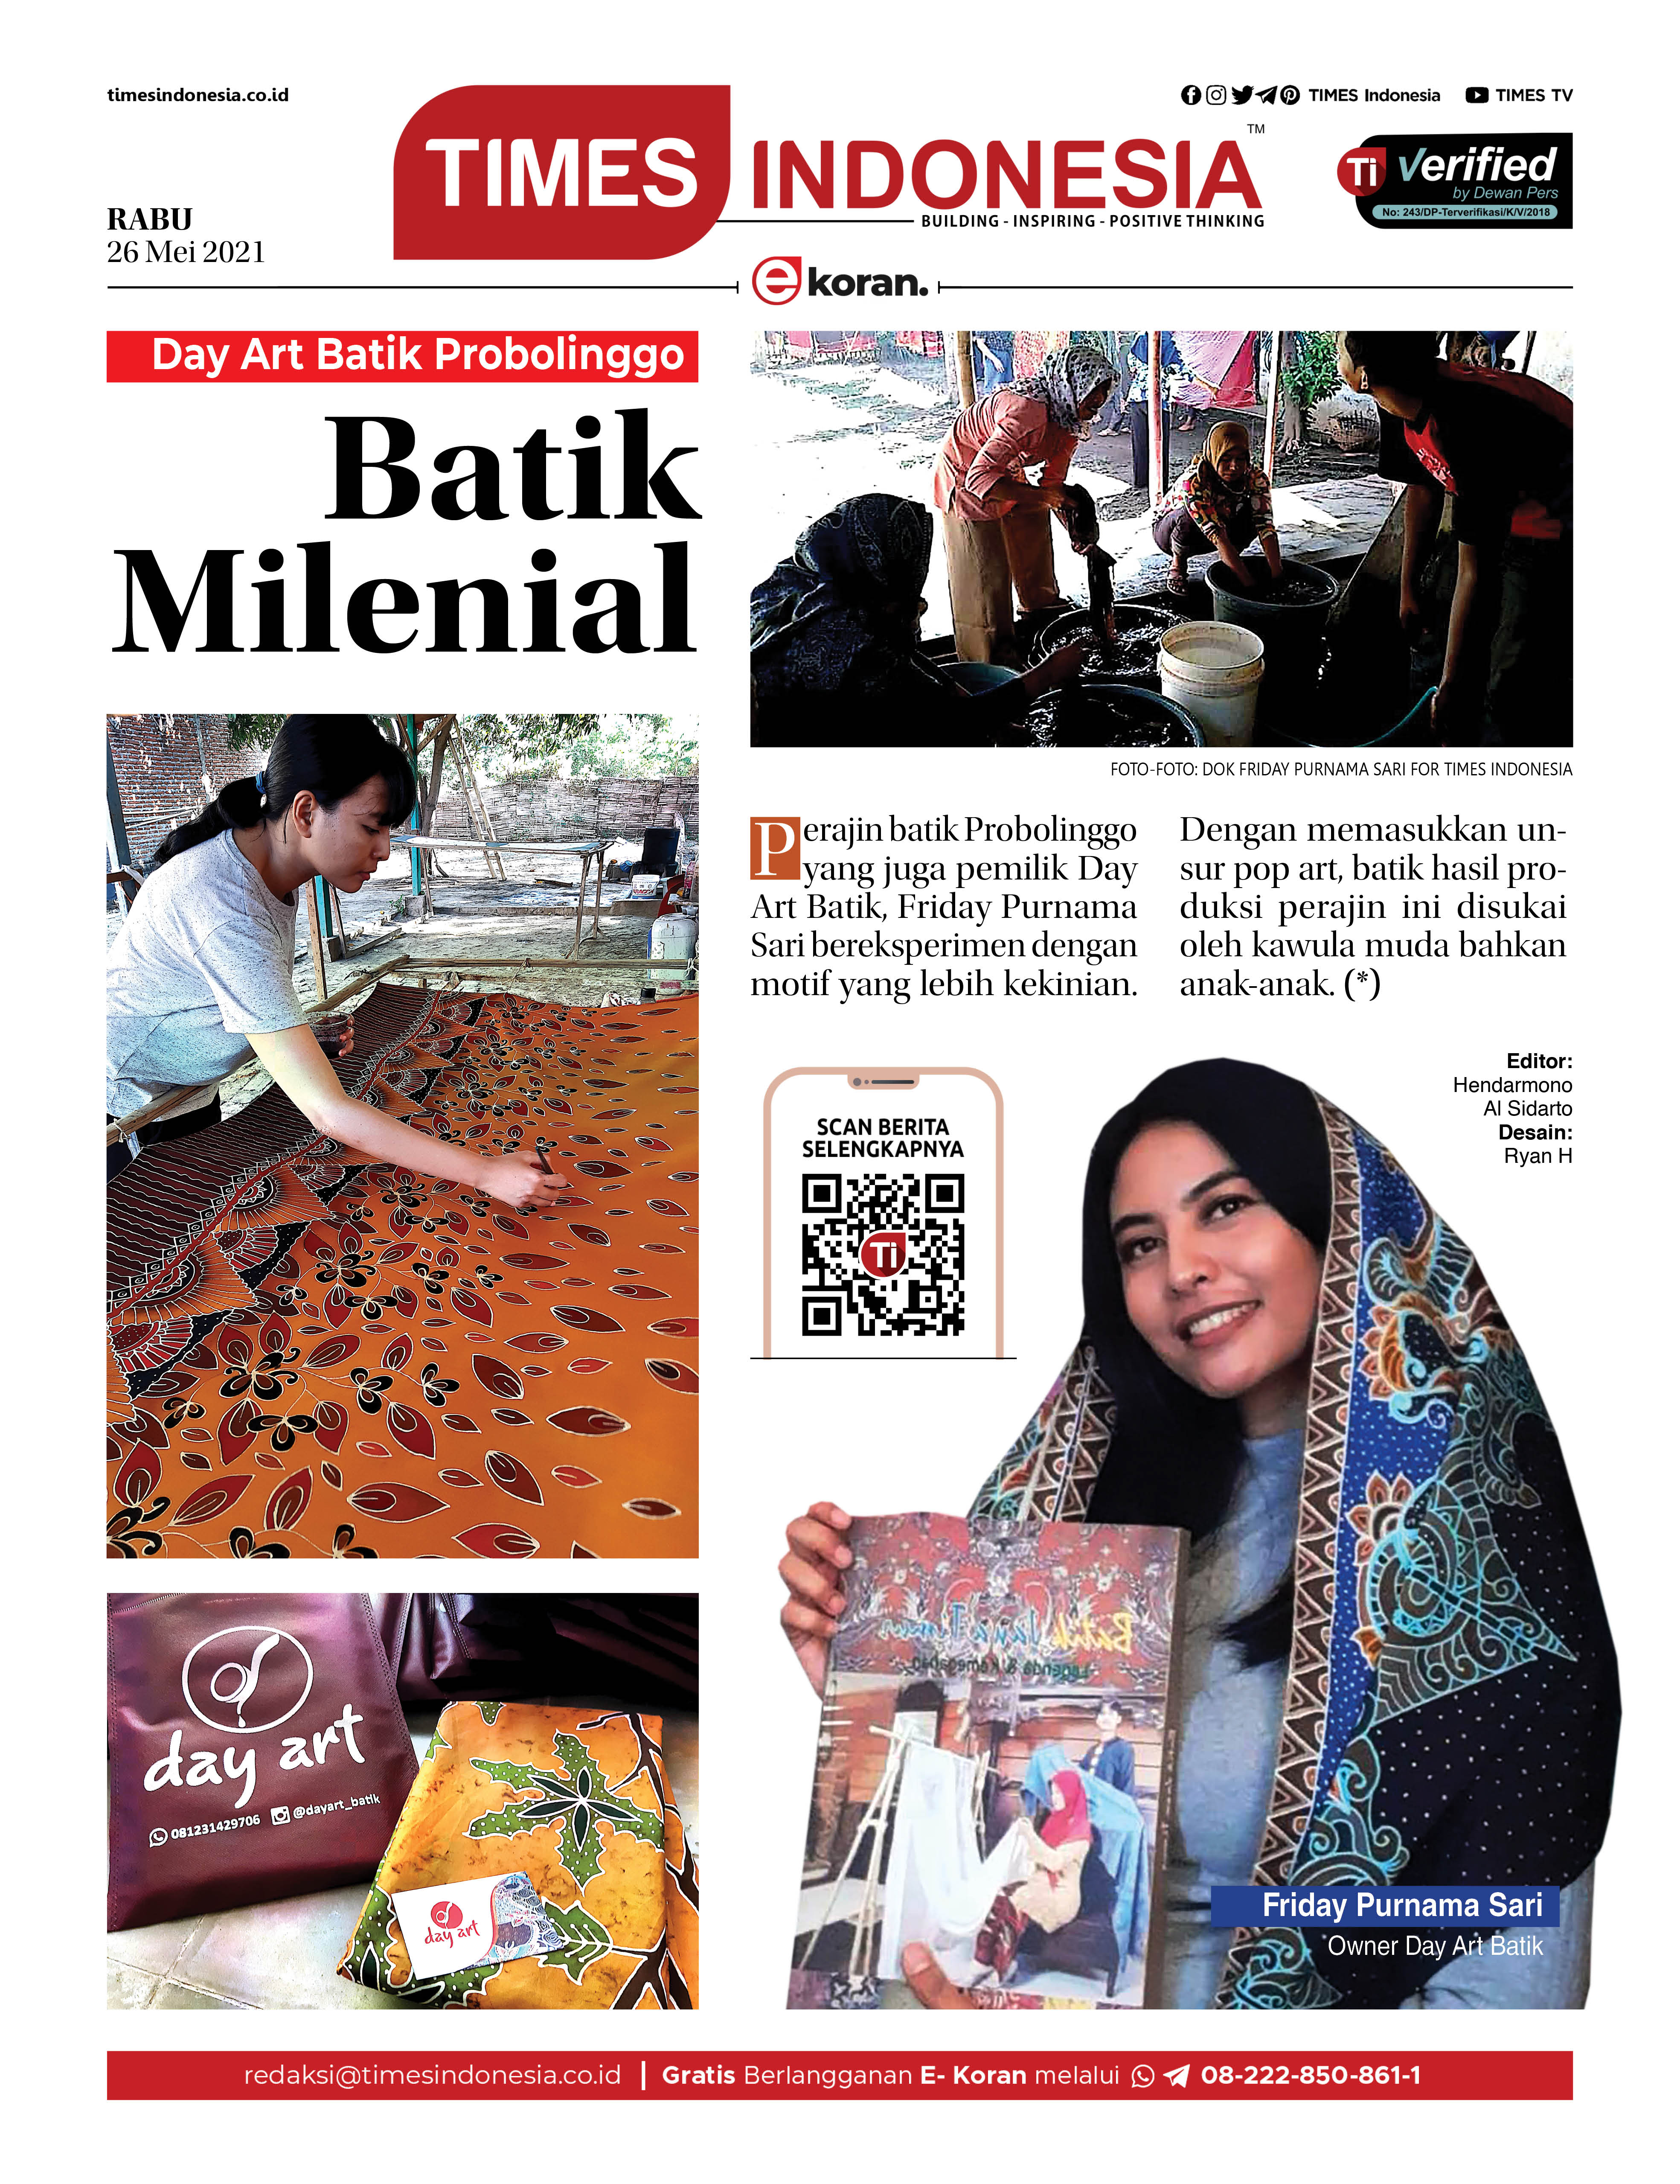 Rabu-26-Mei-2021-Day-Art-Batik.jpg